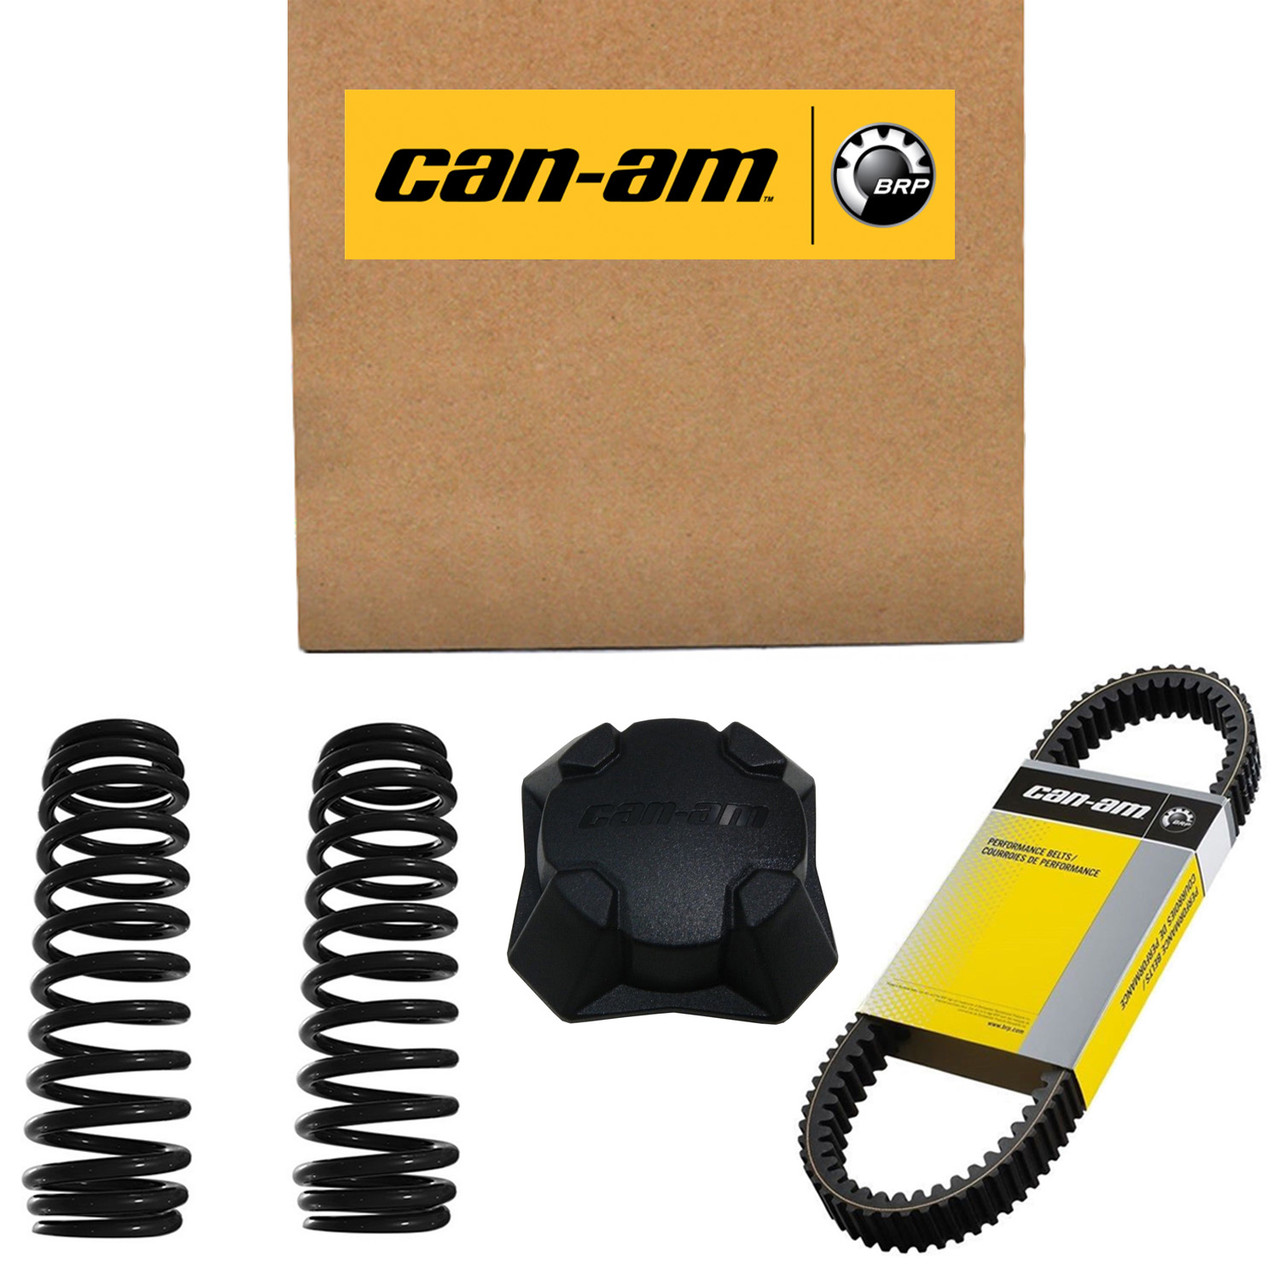 Can-Am New OEM Drive Gear, 27 Teeth, 420434680